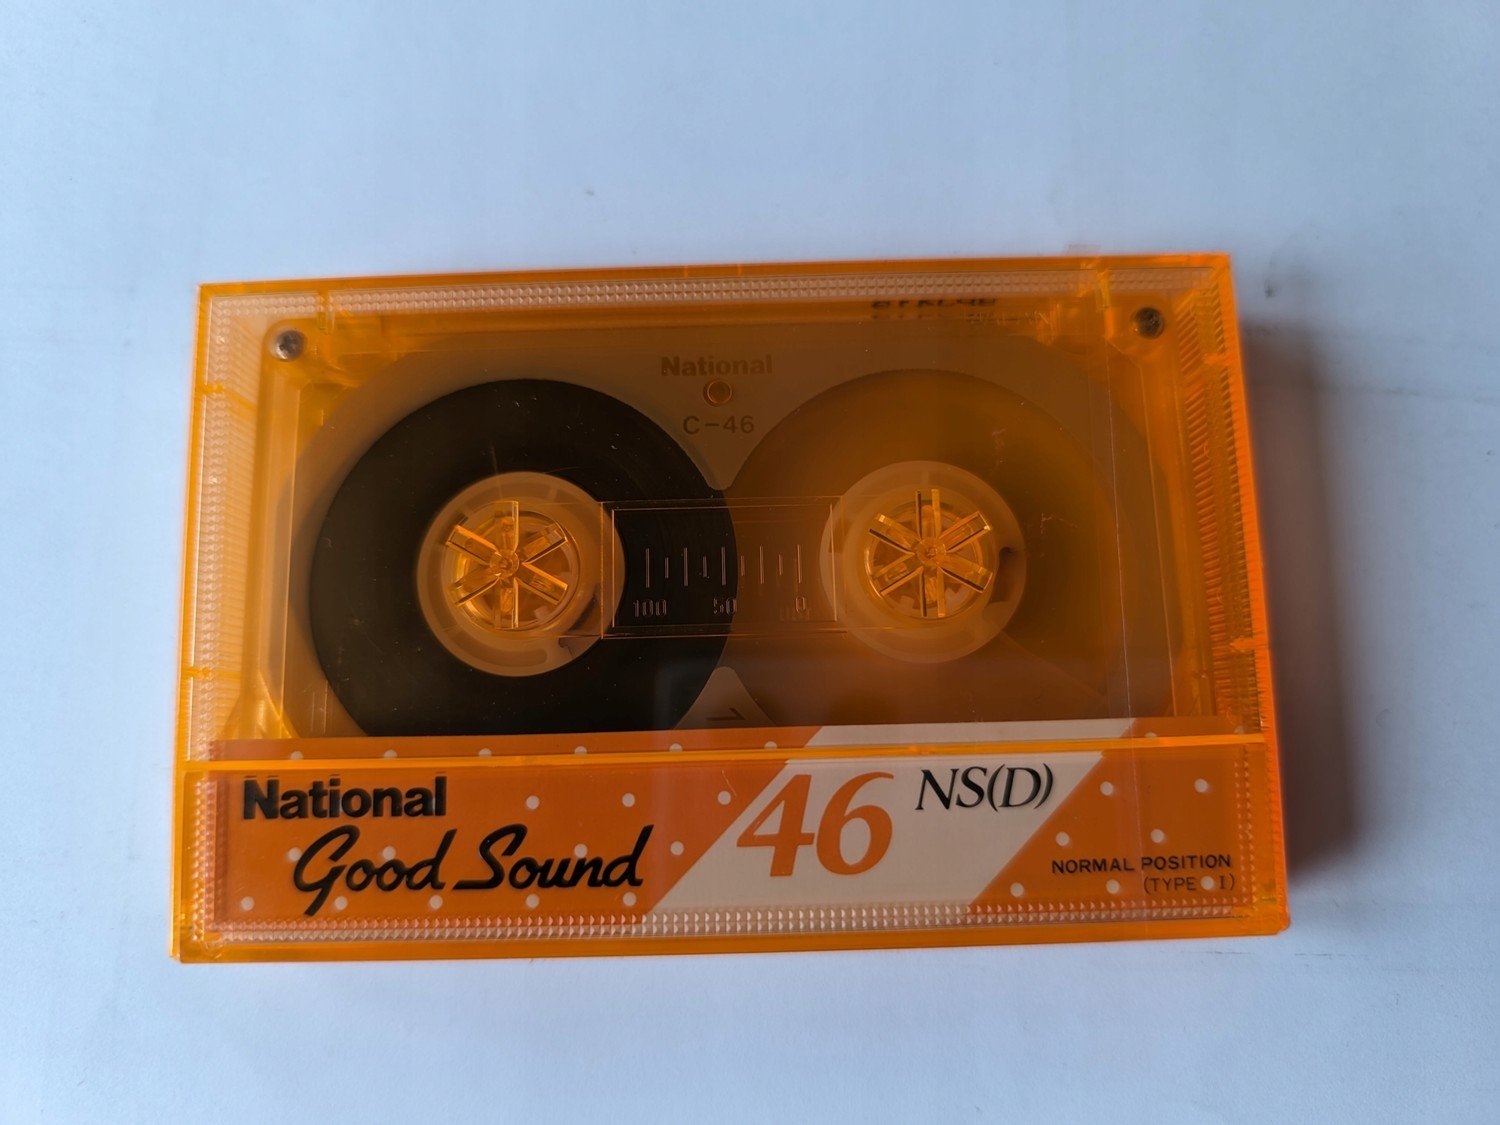 National Technics Good Sound RT-46NS(D) 1986